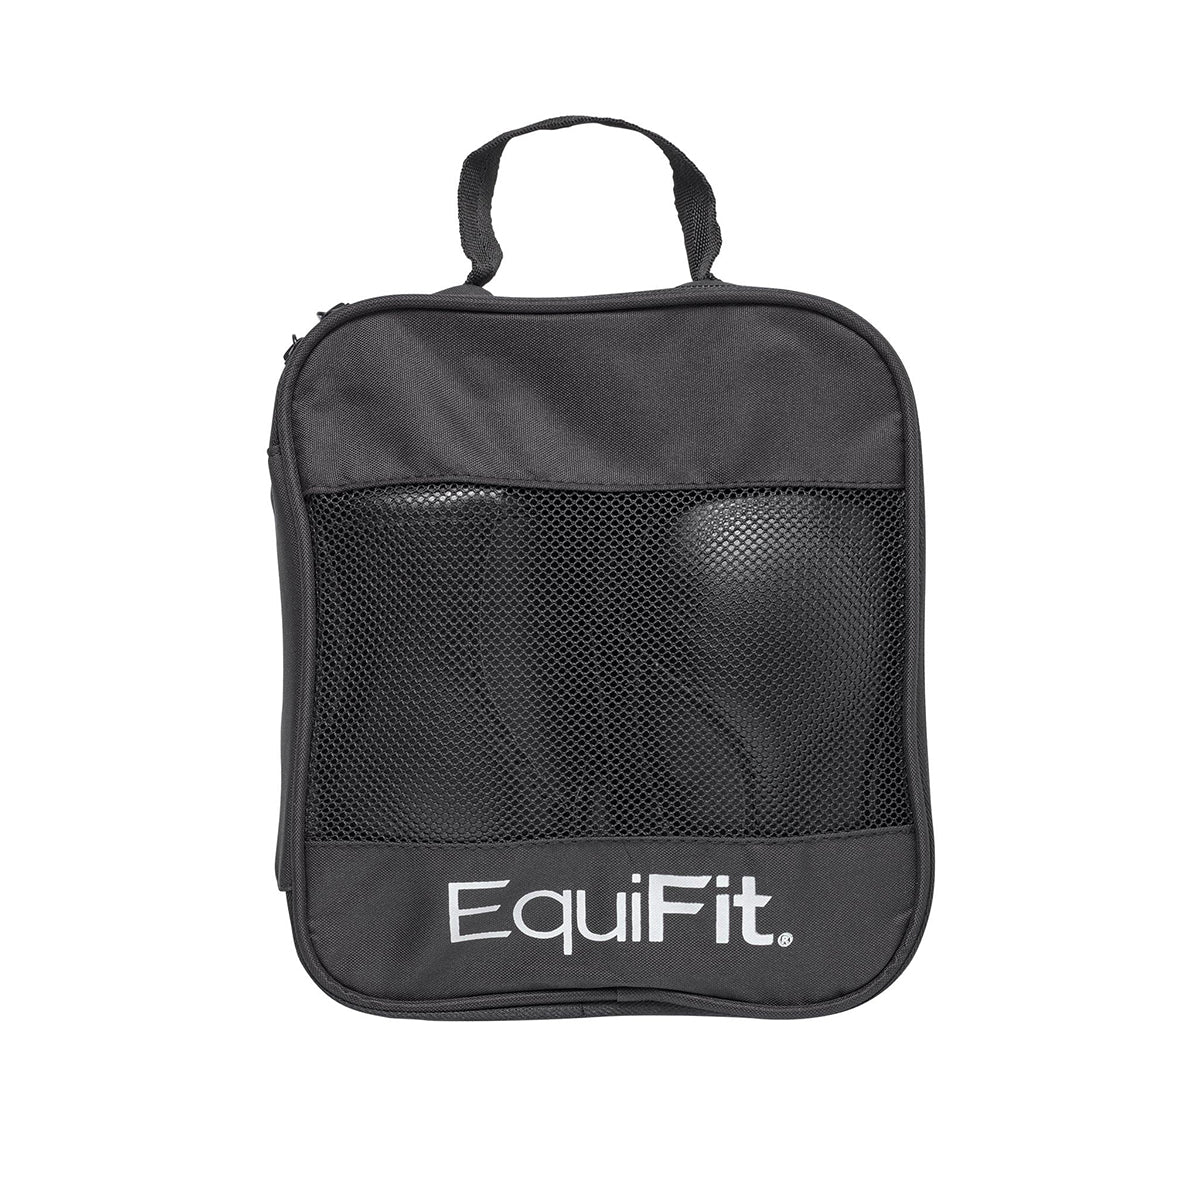 Equifit Boot Bag